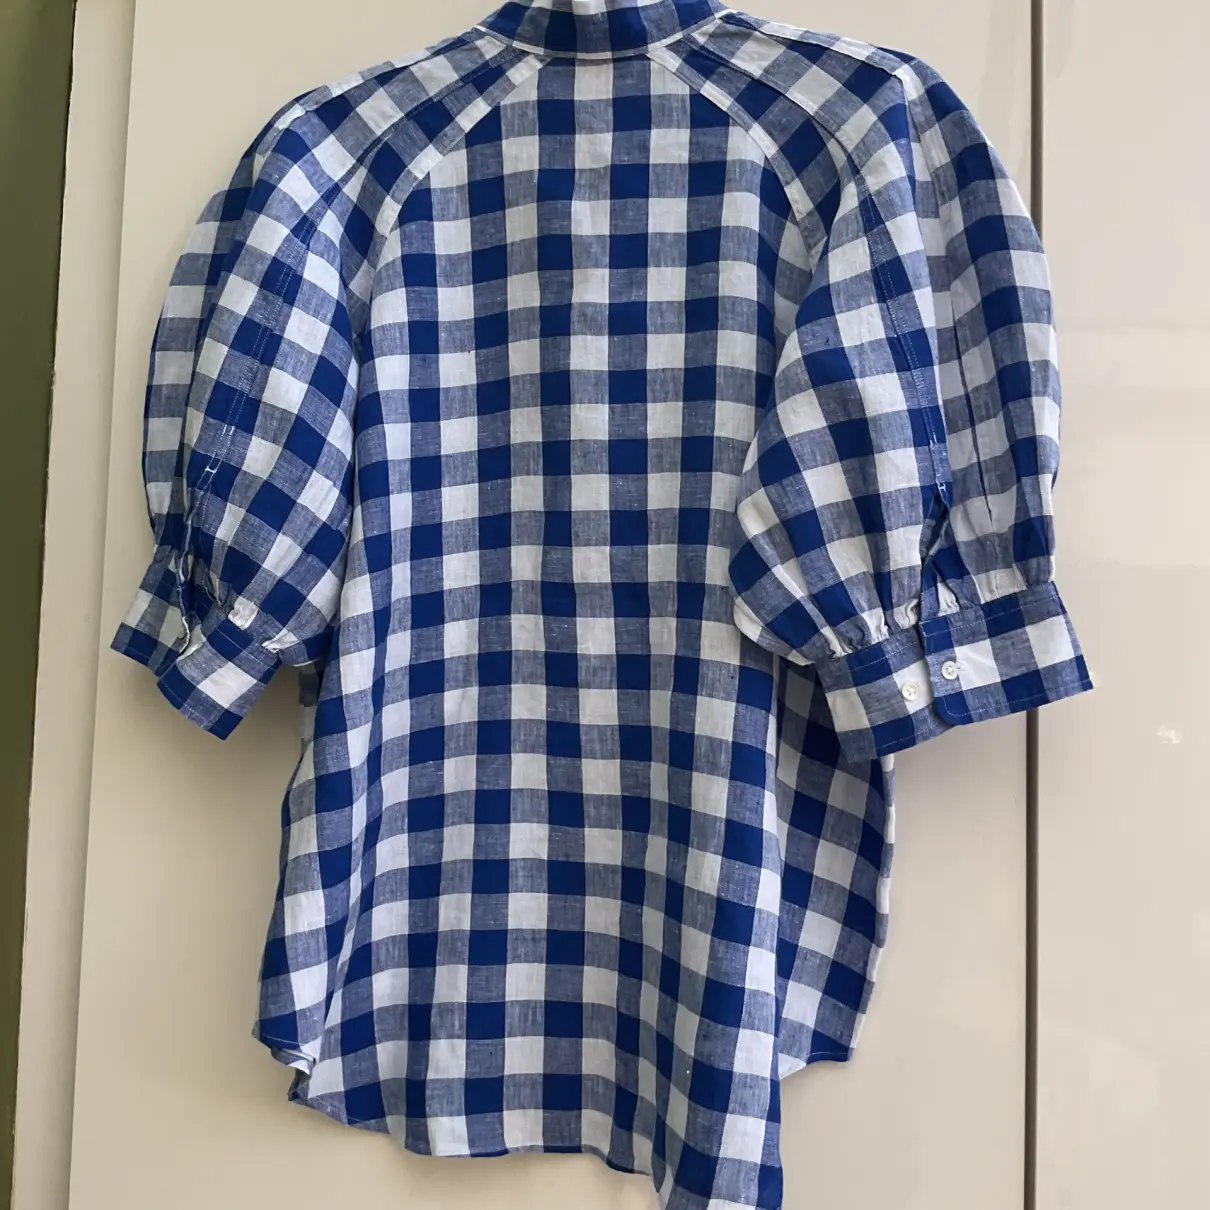 Buy Polo Ralph Lauren Linen blouse online